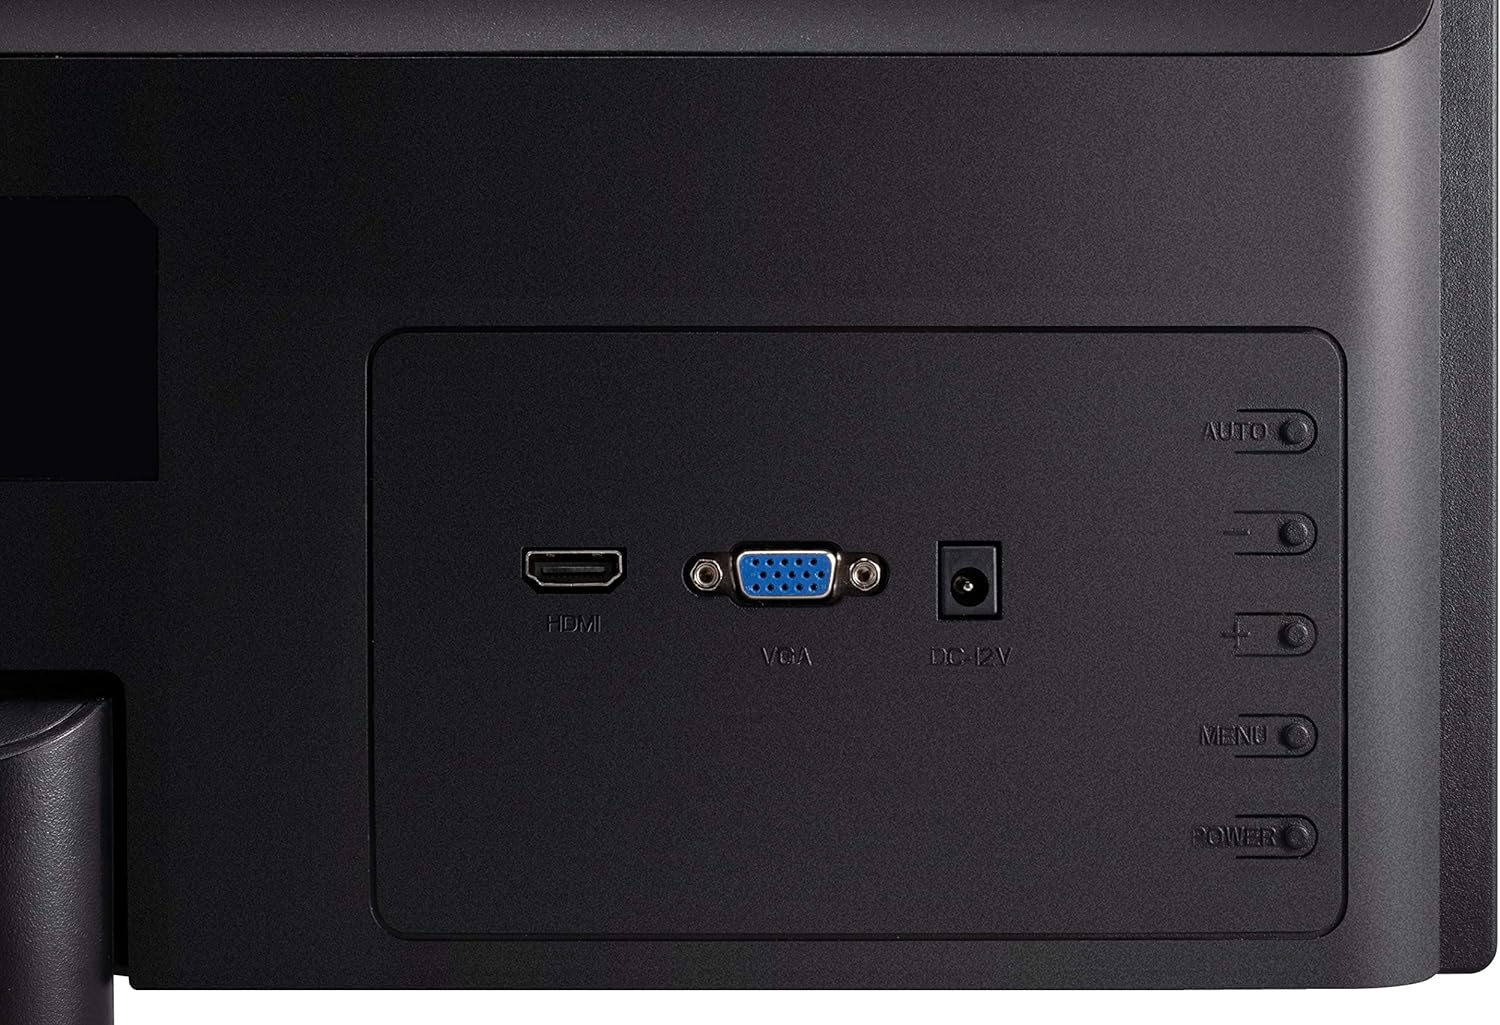 Viewsonic 22" 1080p LED Backlit Display Ergonomic Monitor ( VA2223-H ) NOB